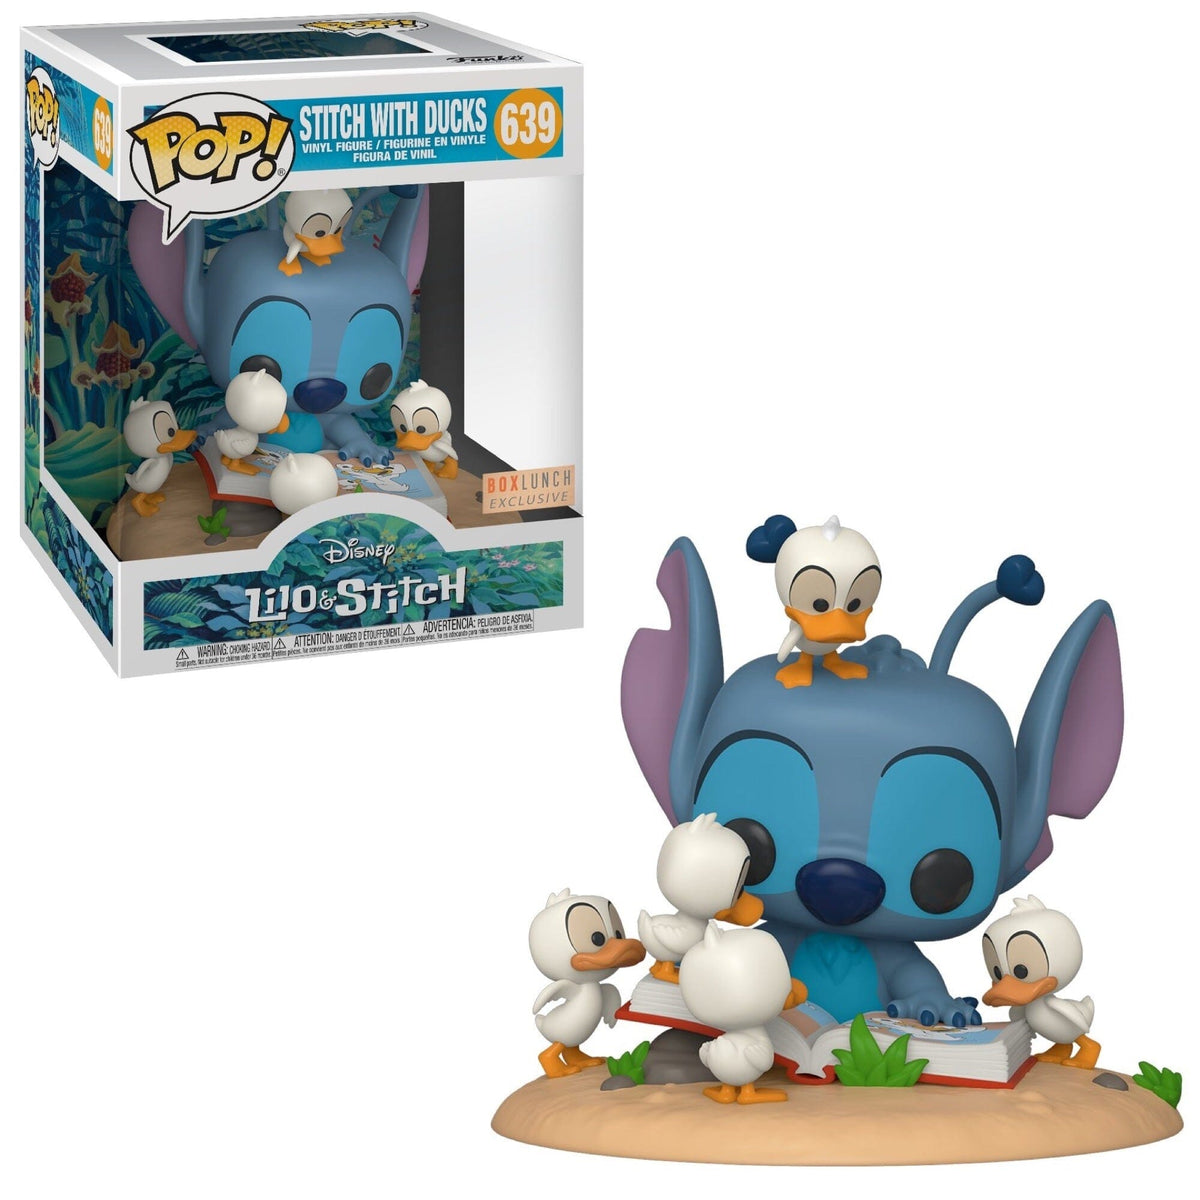 Funko POP Disney Stitch Sitting - #1045